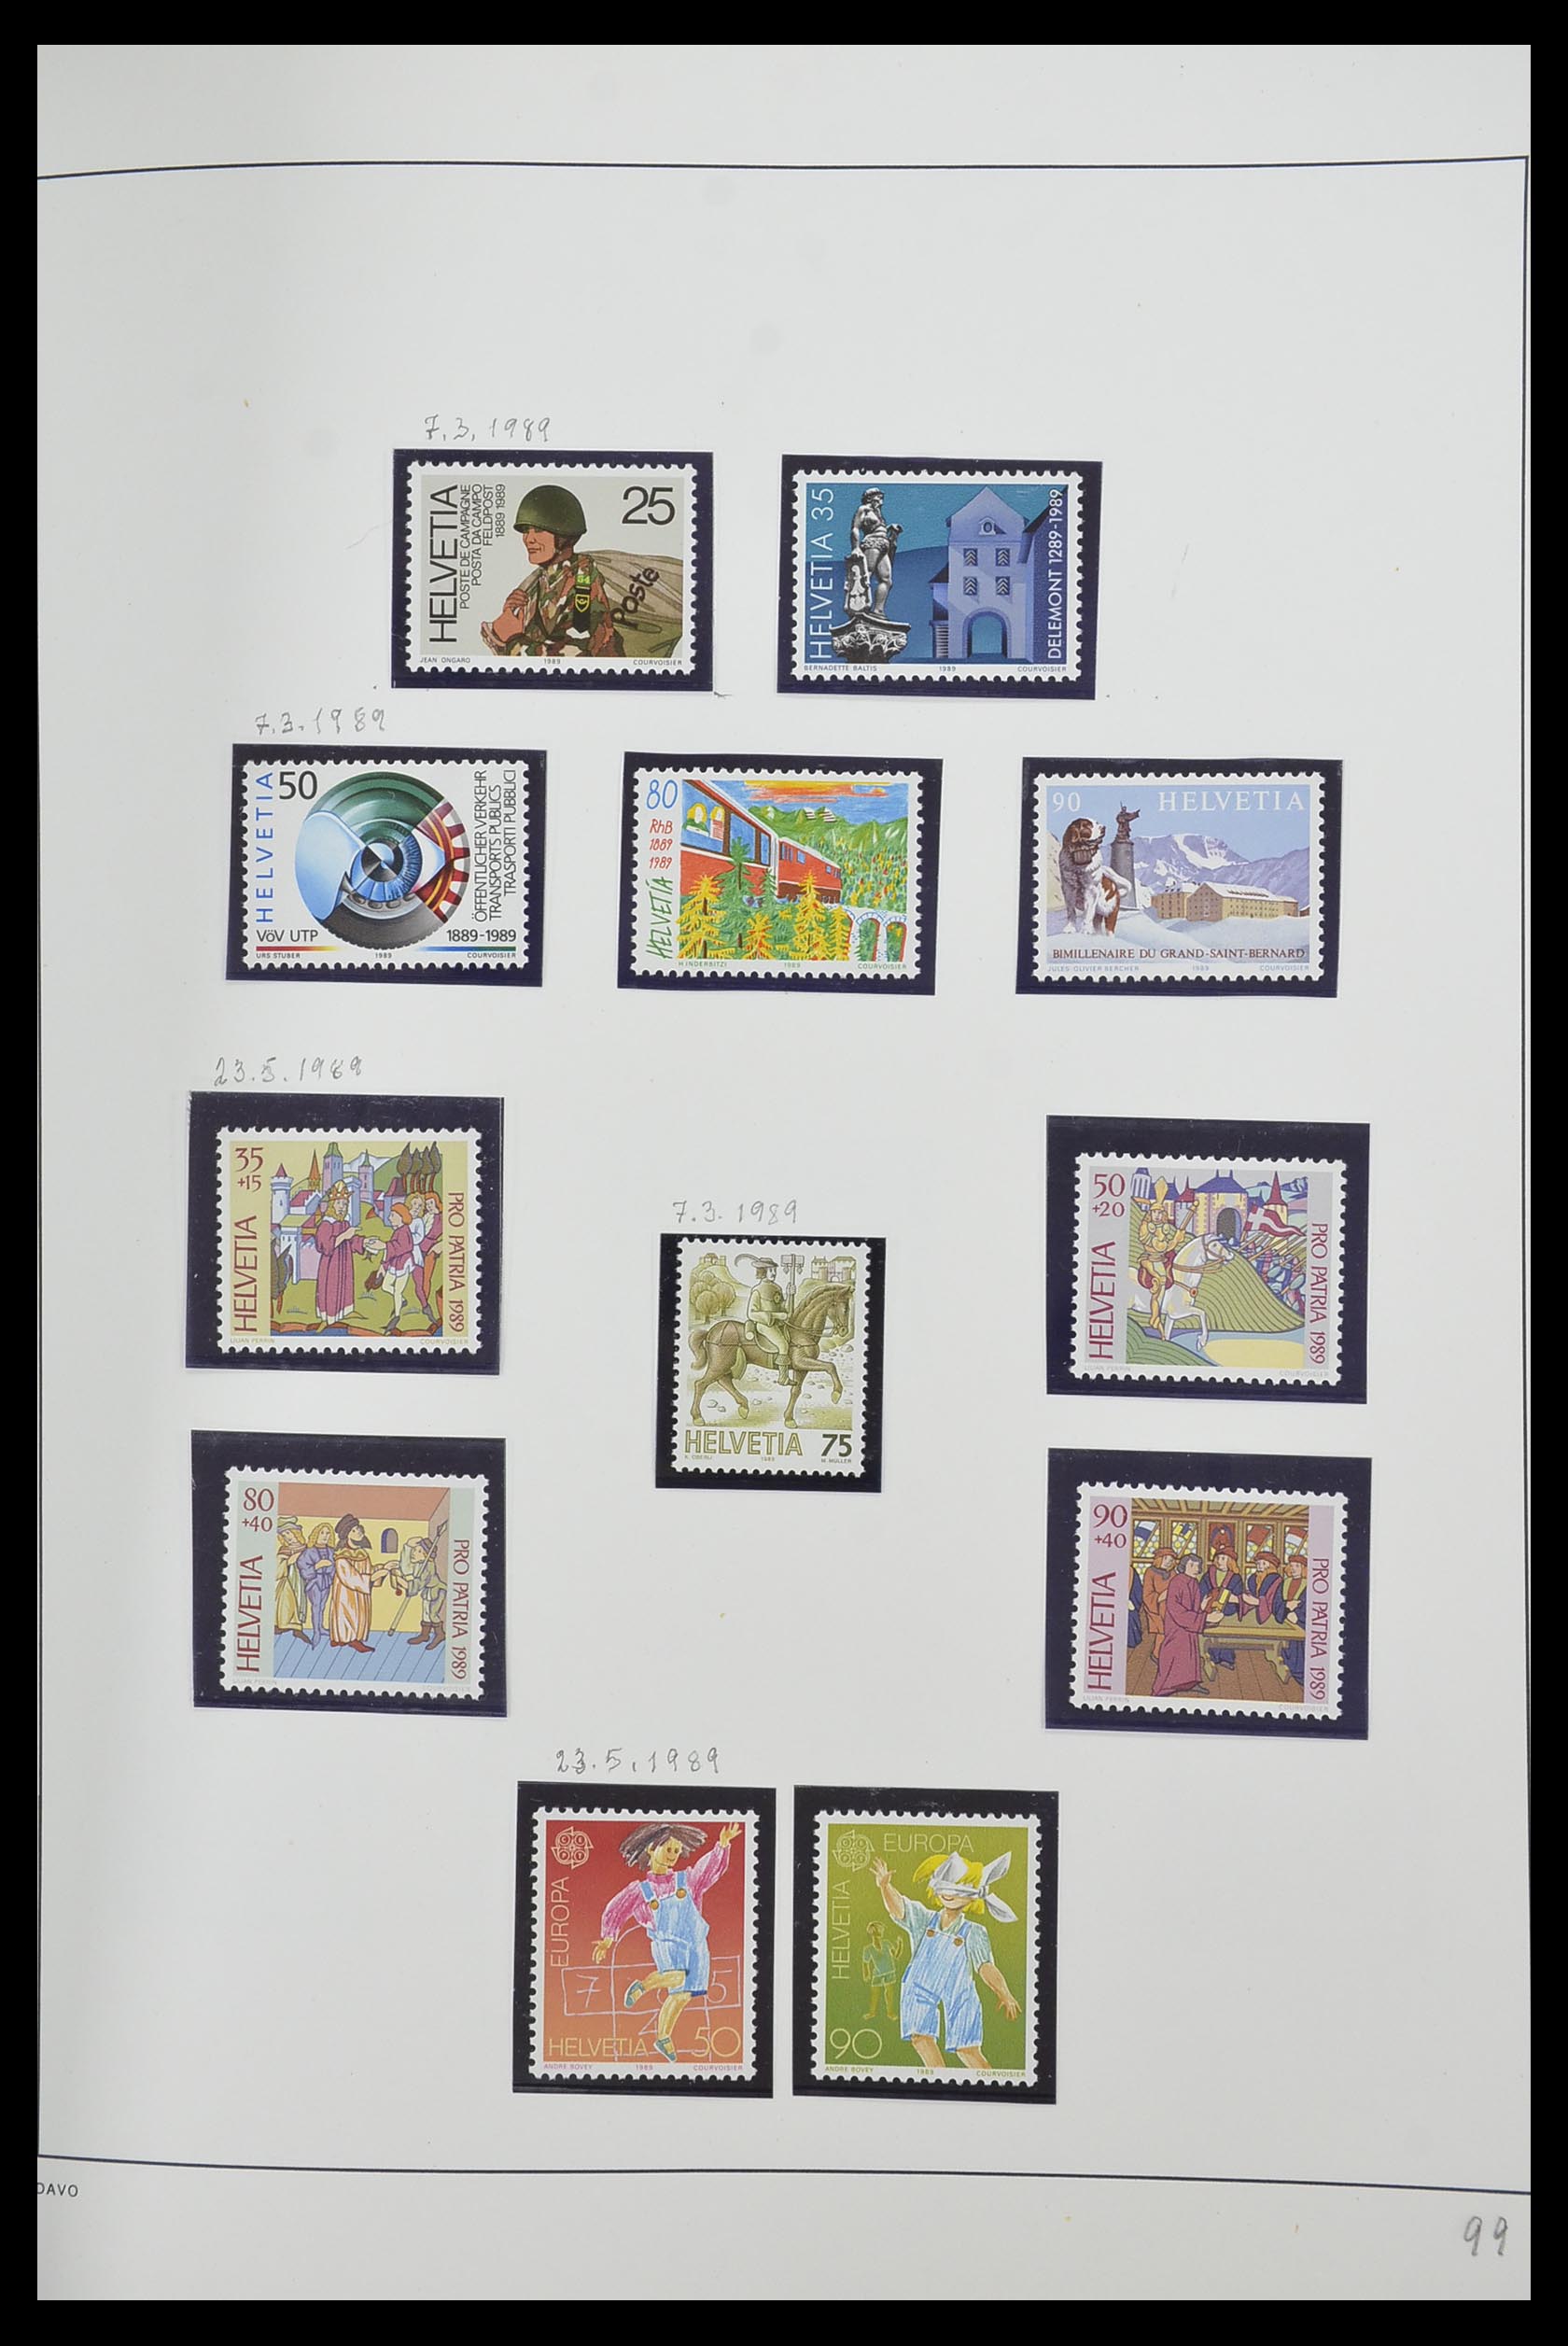 33556 101 - Stamp collection 33556 Switzerland 1862-2000.